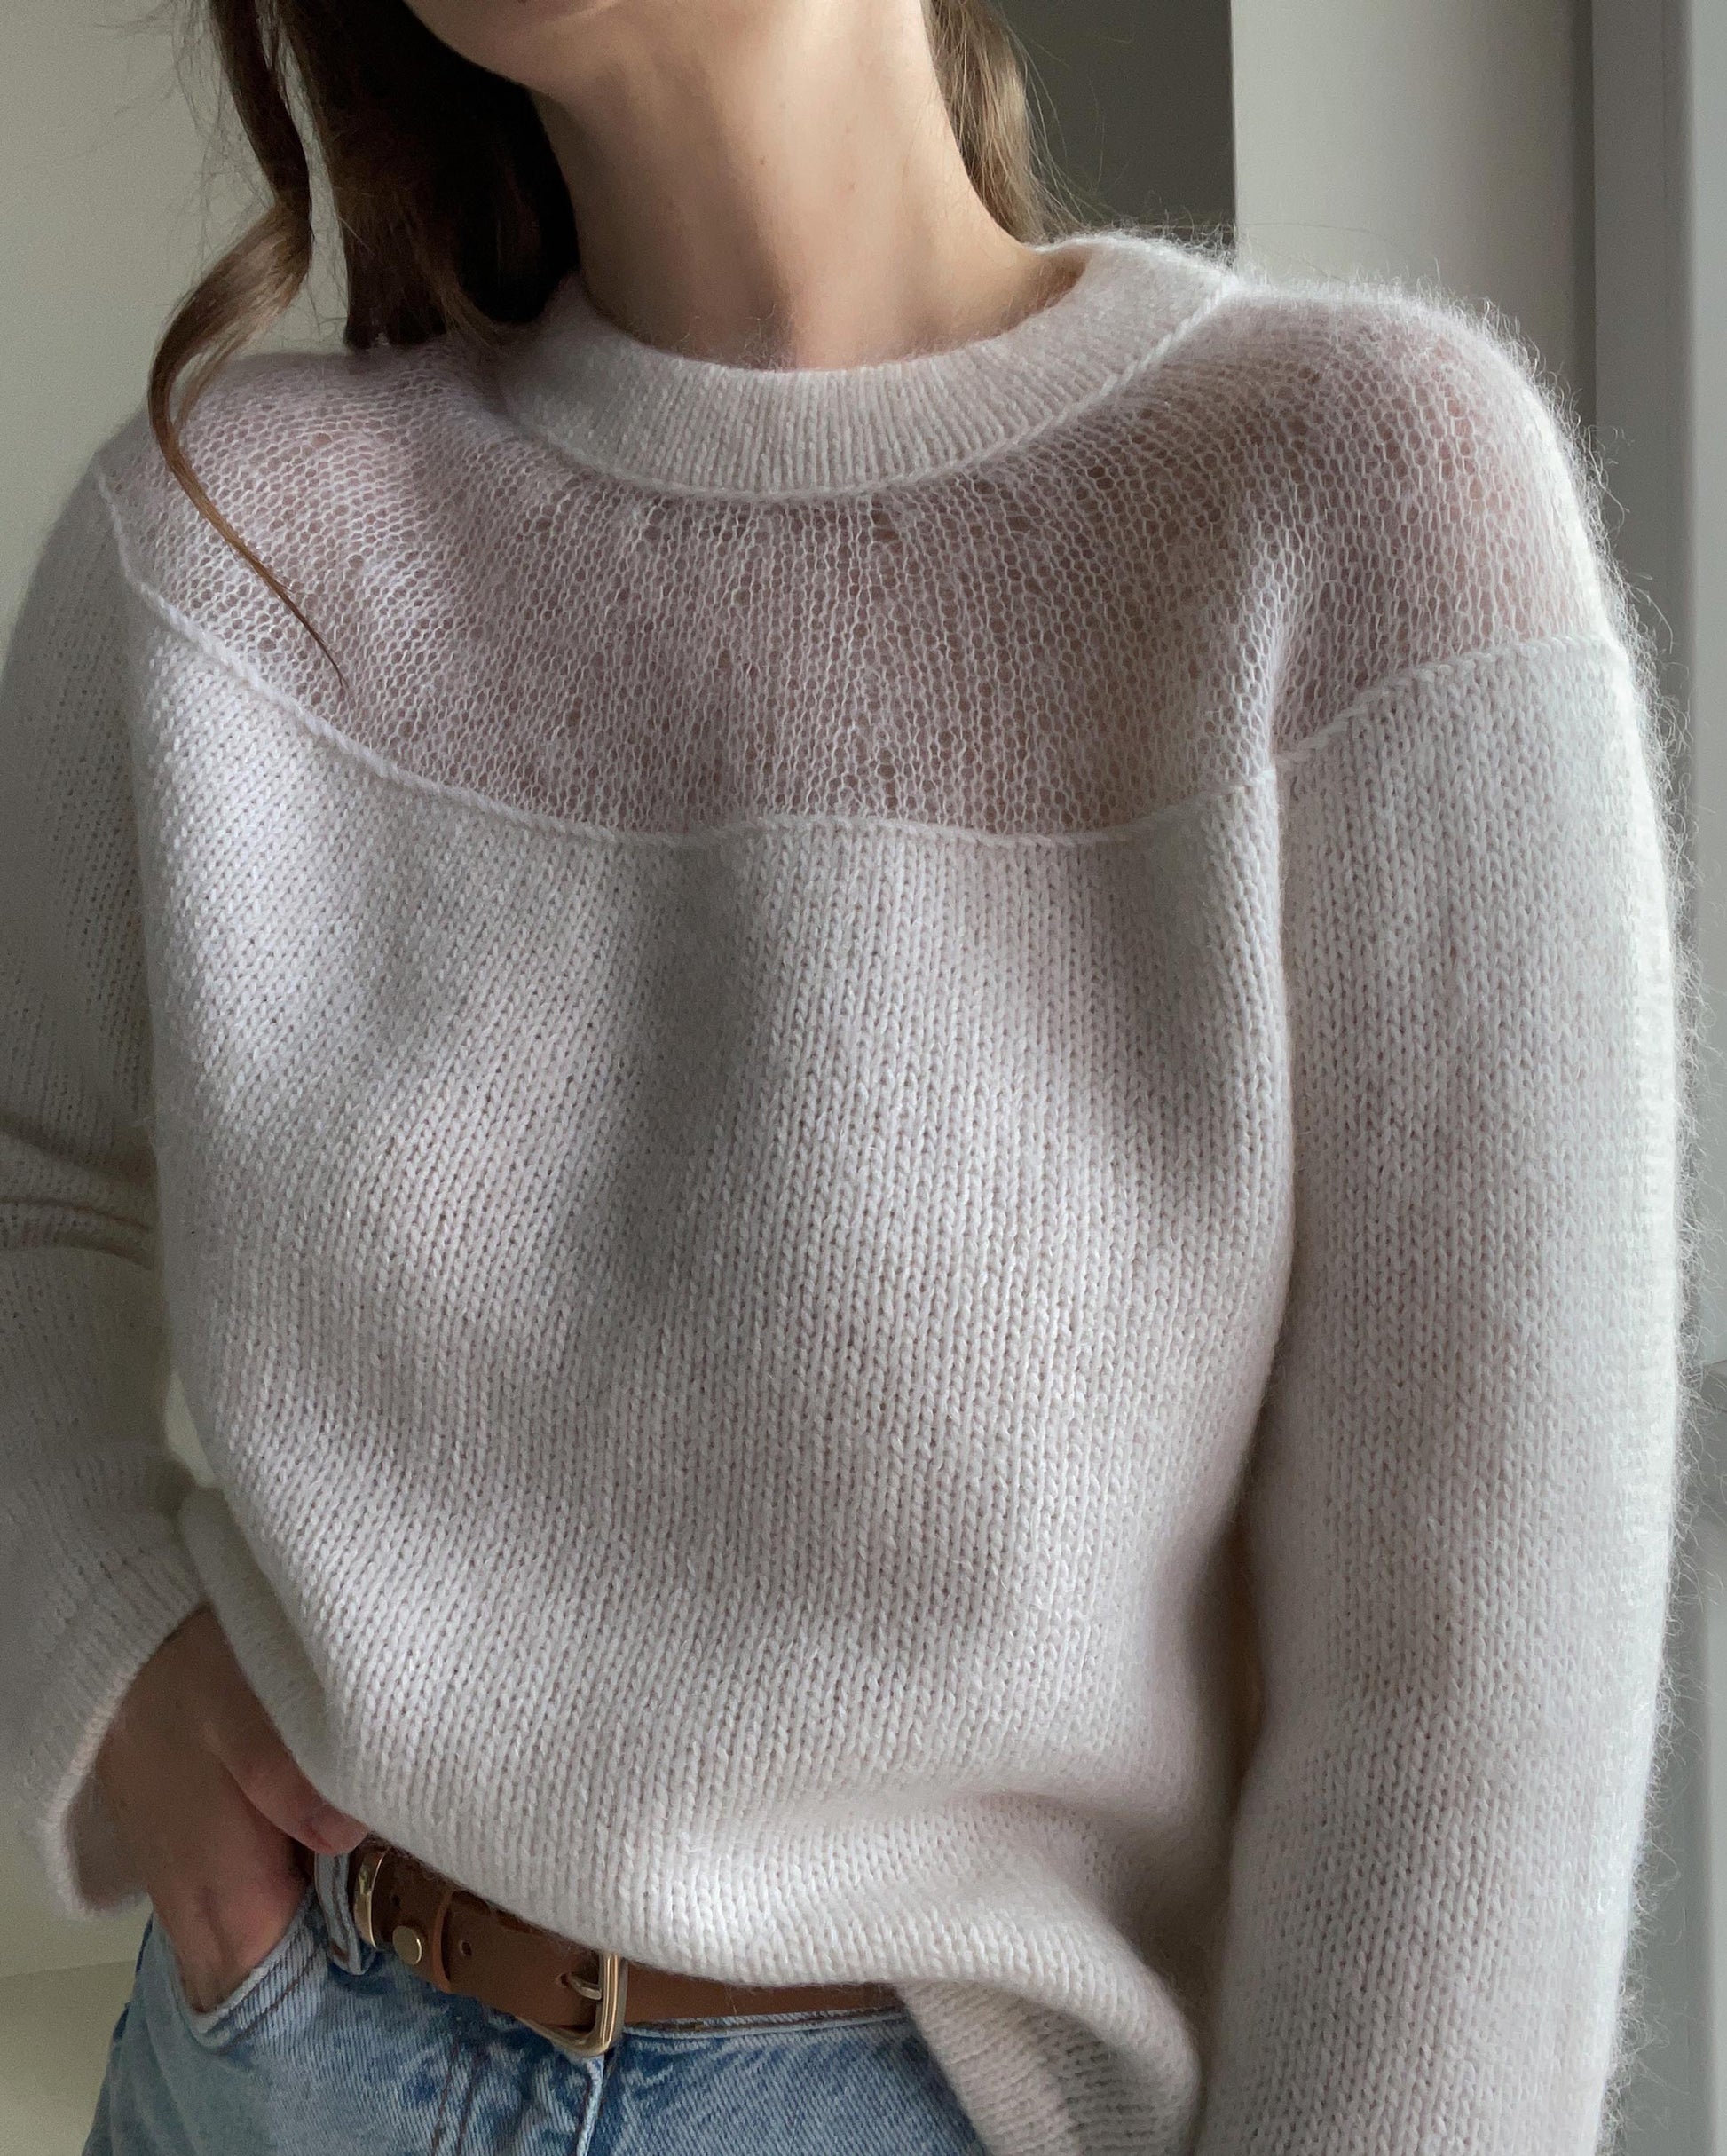 Heaven Blouse knitting pattern by MorecaKnit, a sweater with sheer yoke detail